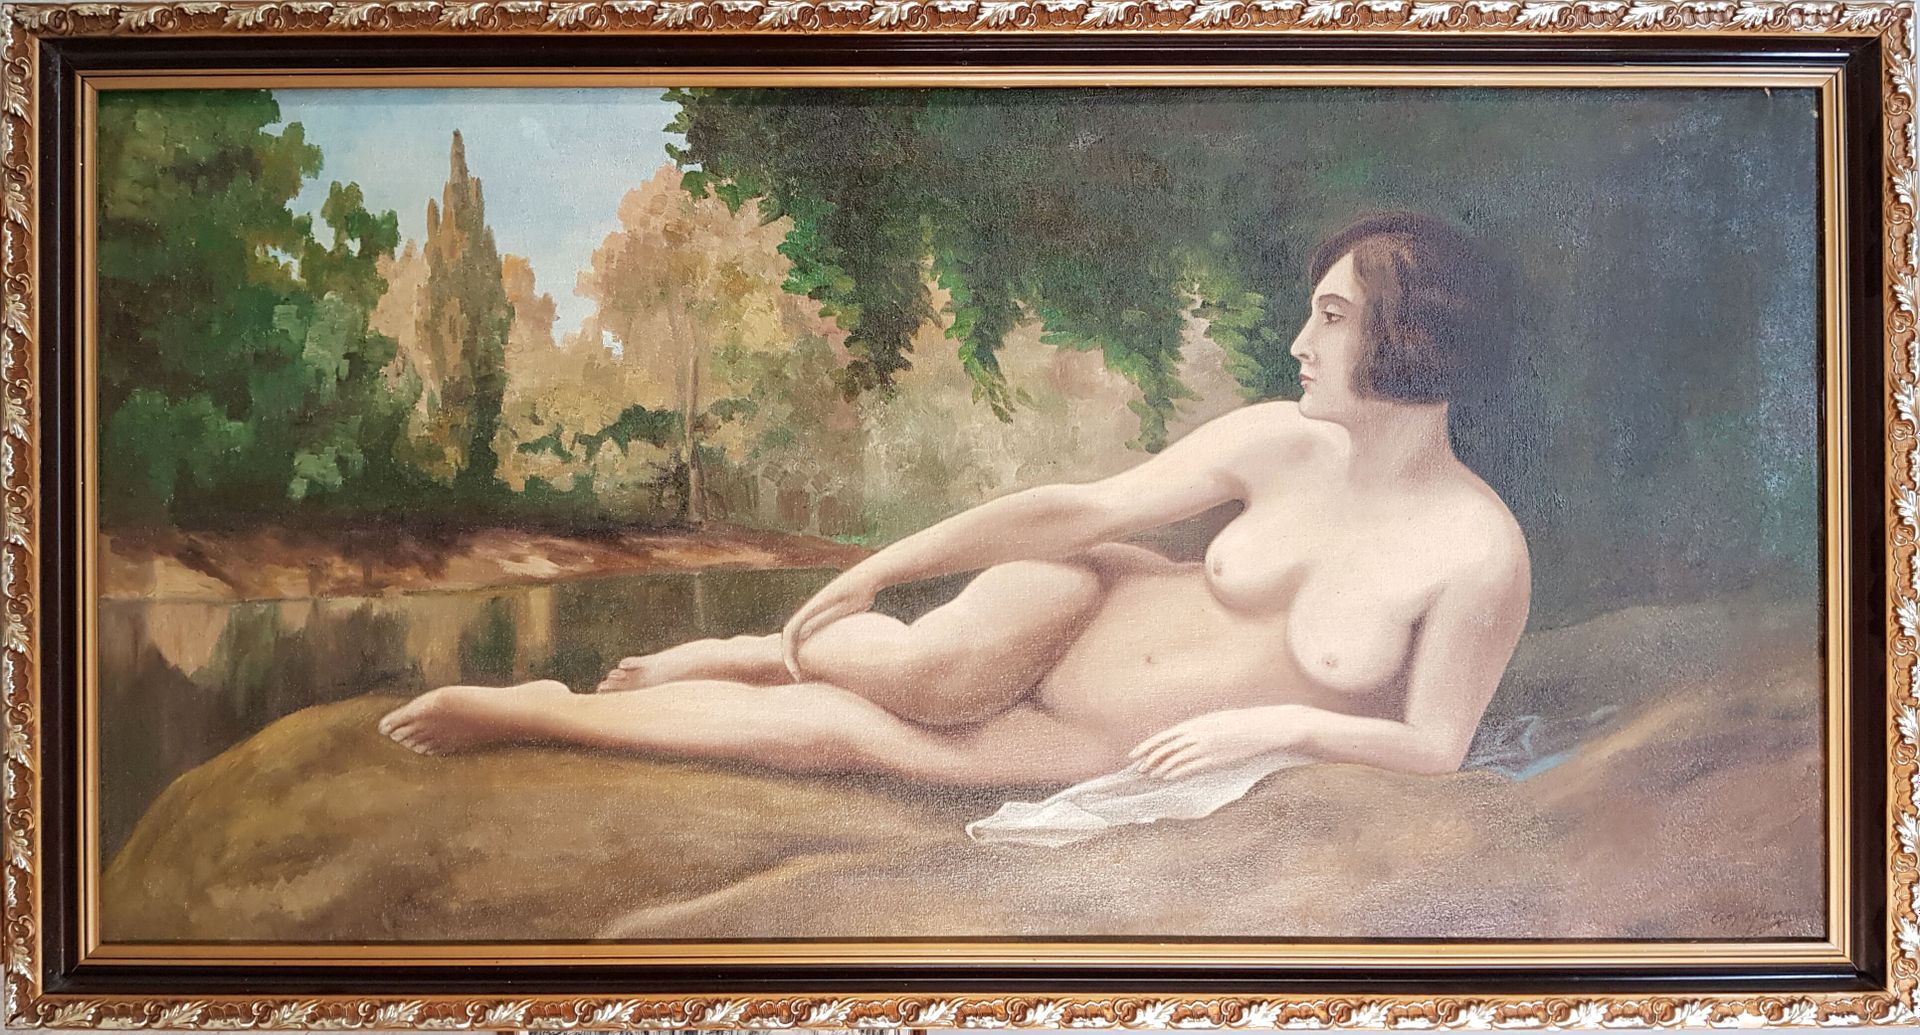 Null 米兰语(20-XXI)
"灌木丛中的裸体"。
约1950年
布面油画
右下方有签名
高60 x 宽120厘米